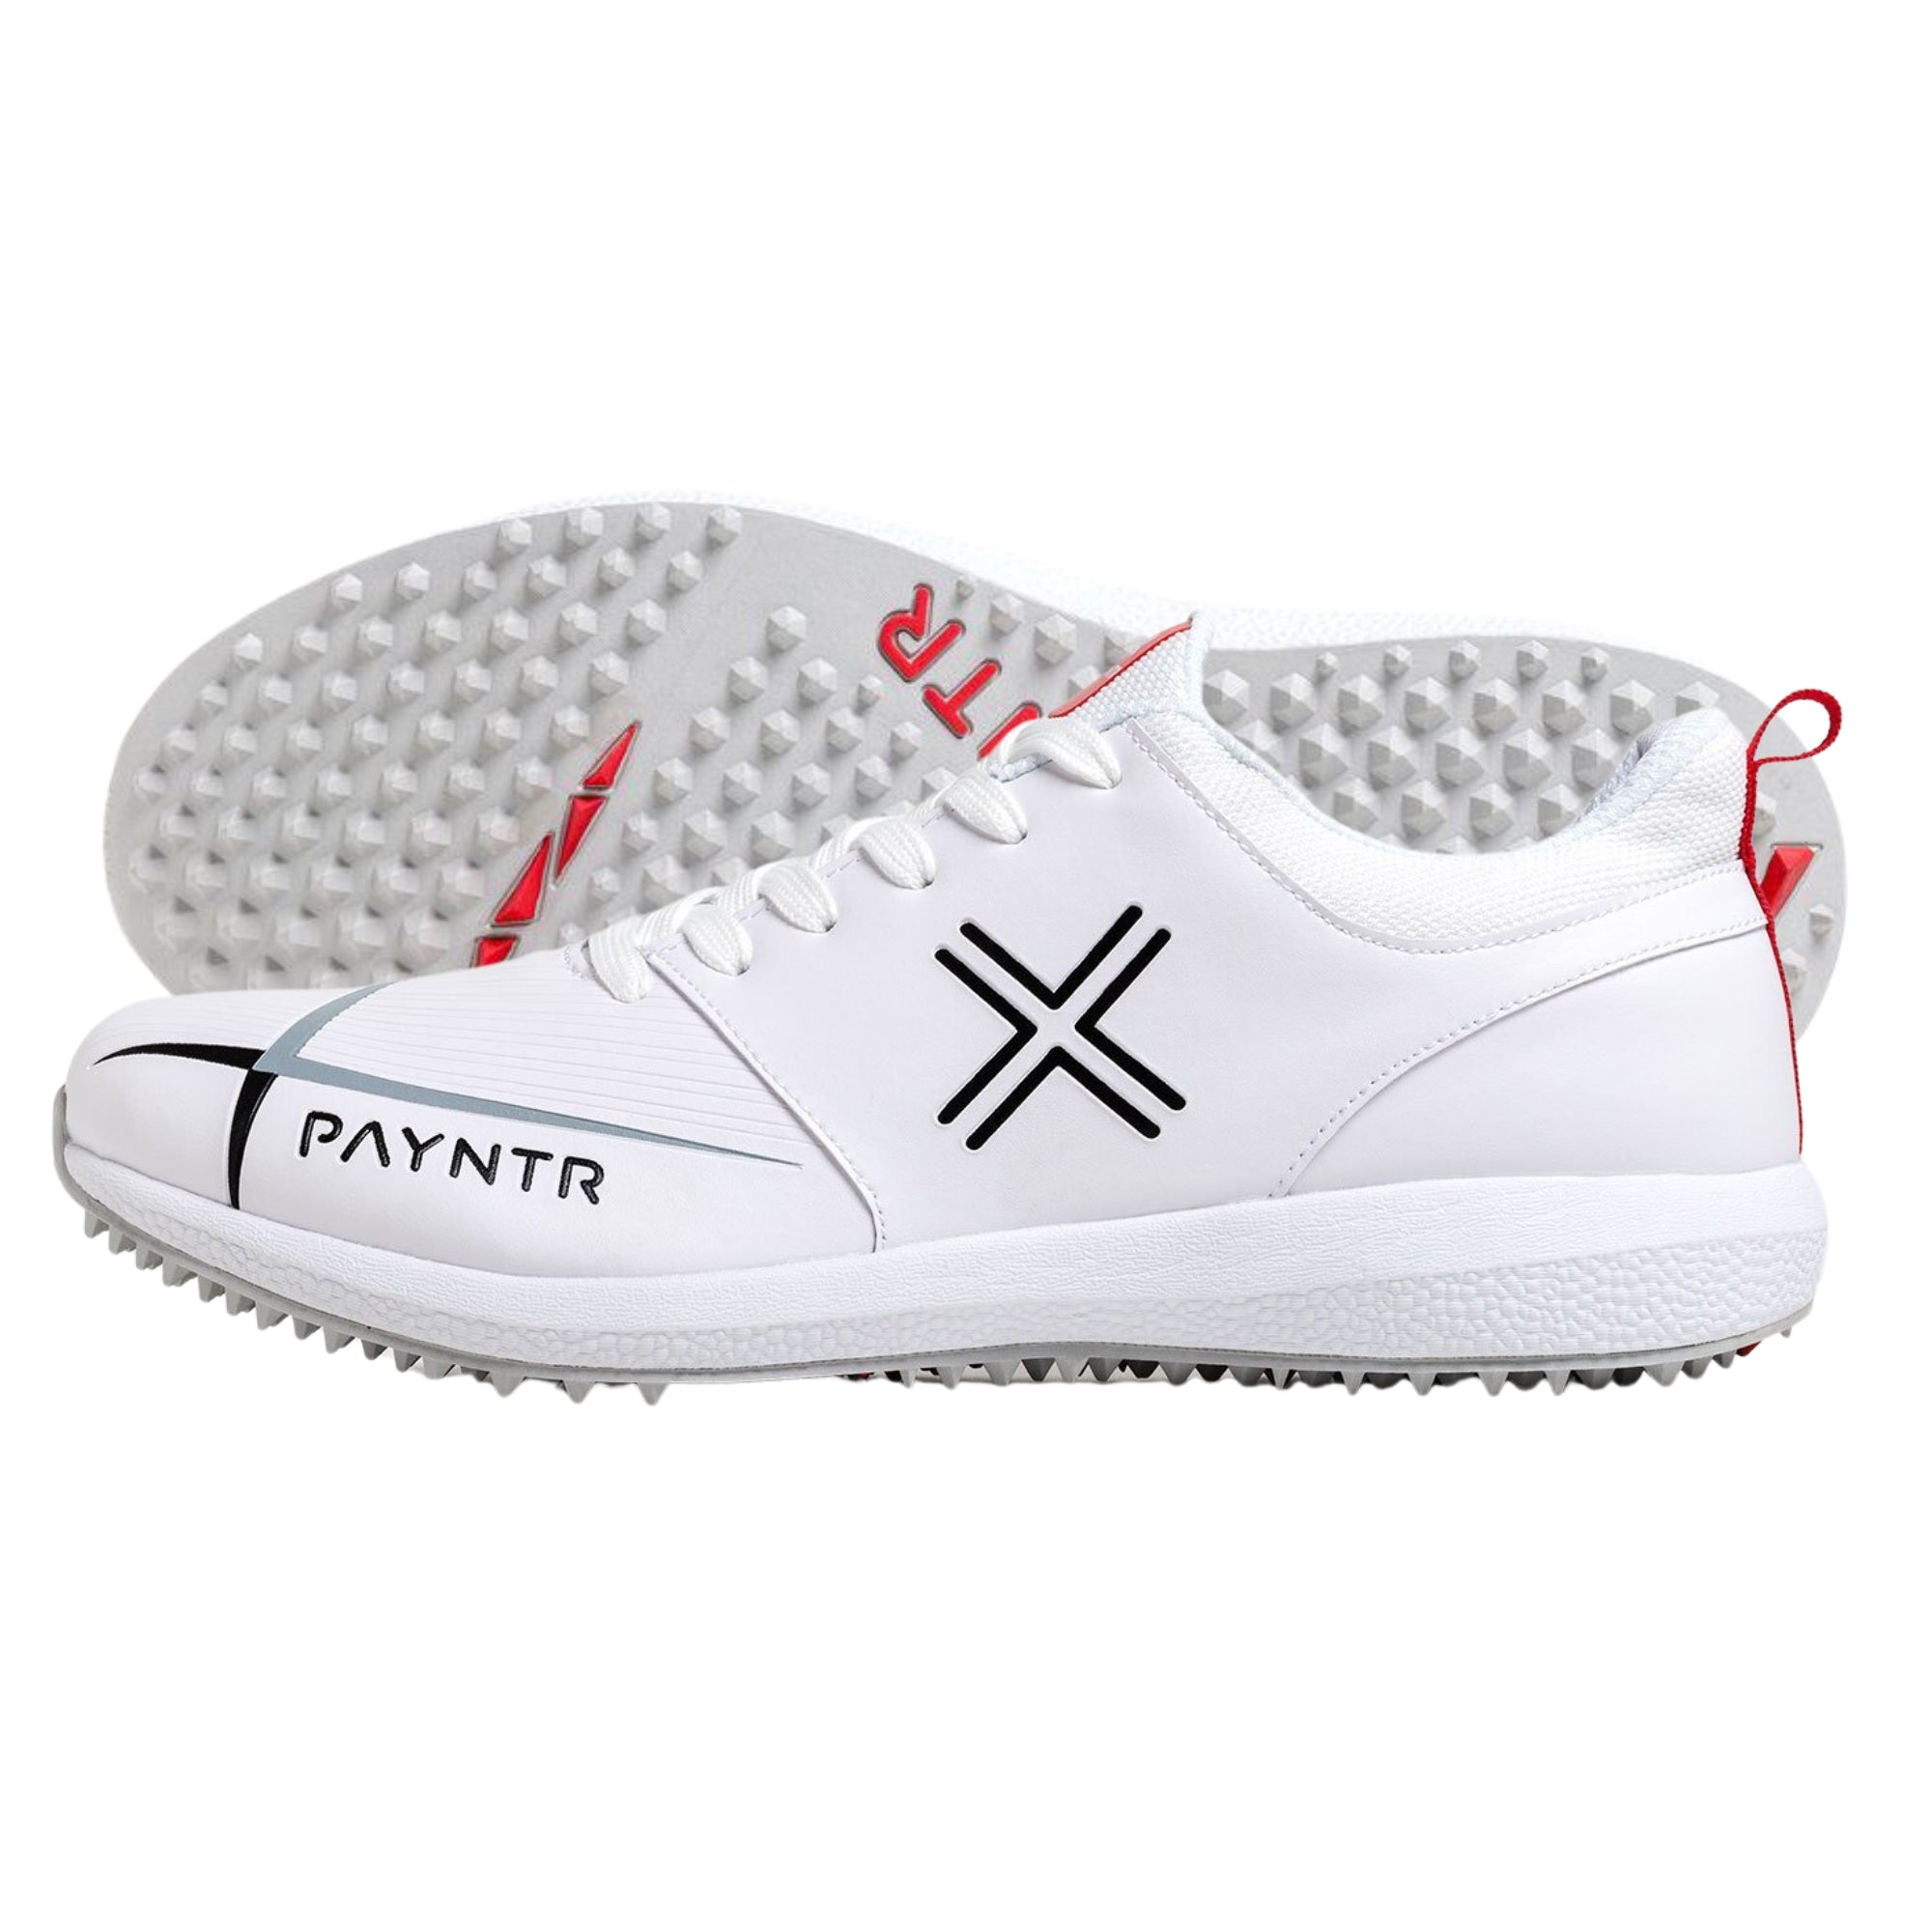 Payntr Cricket Shoes, Model V Pimple - White